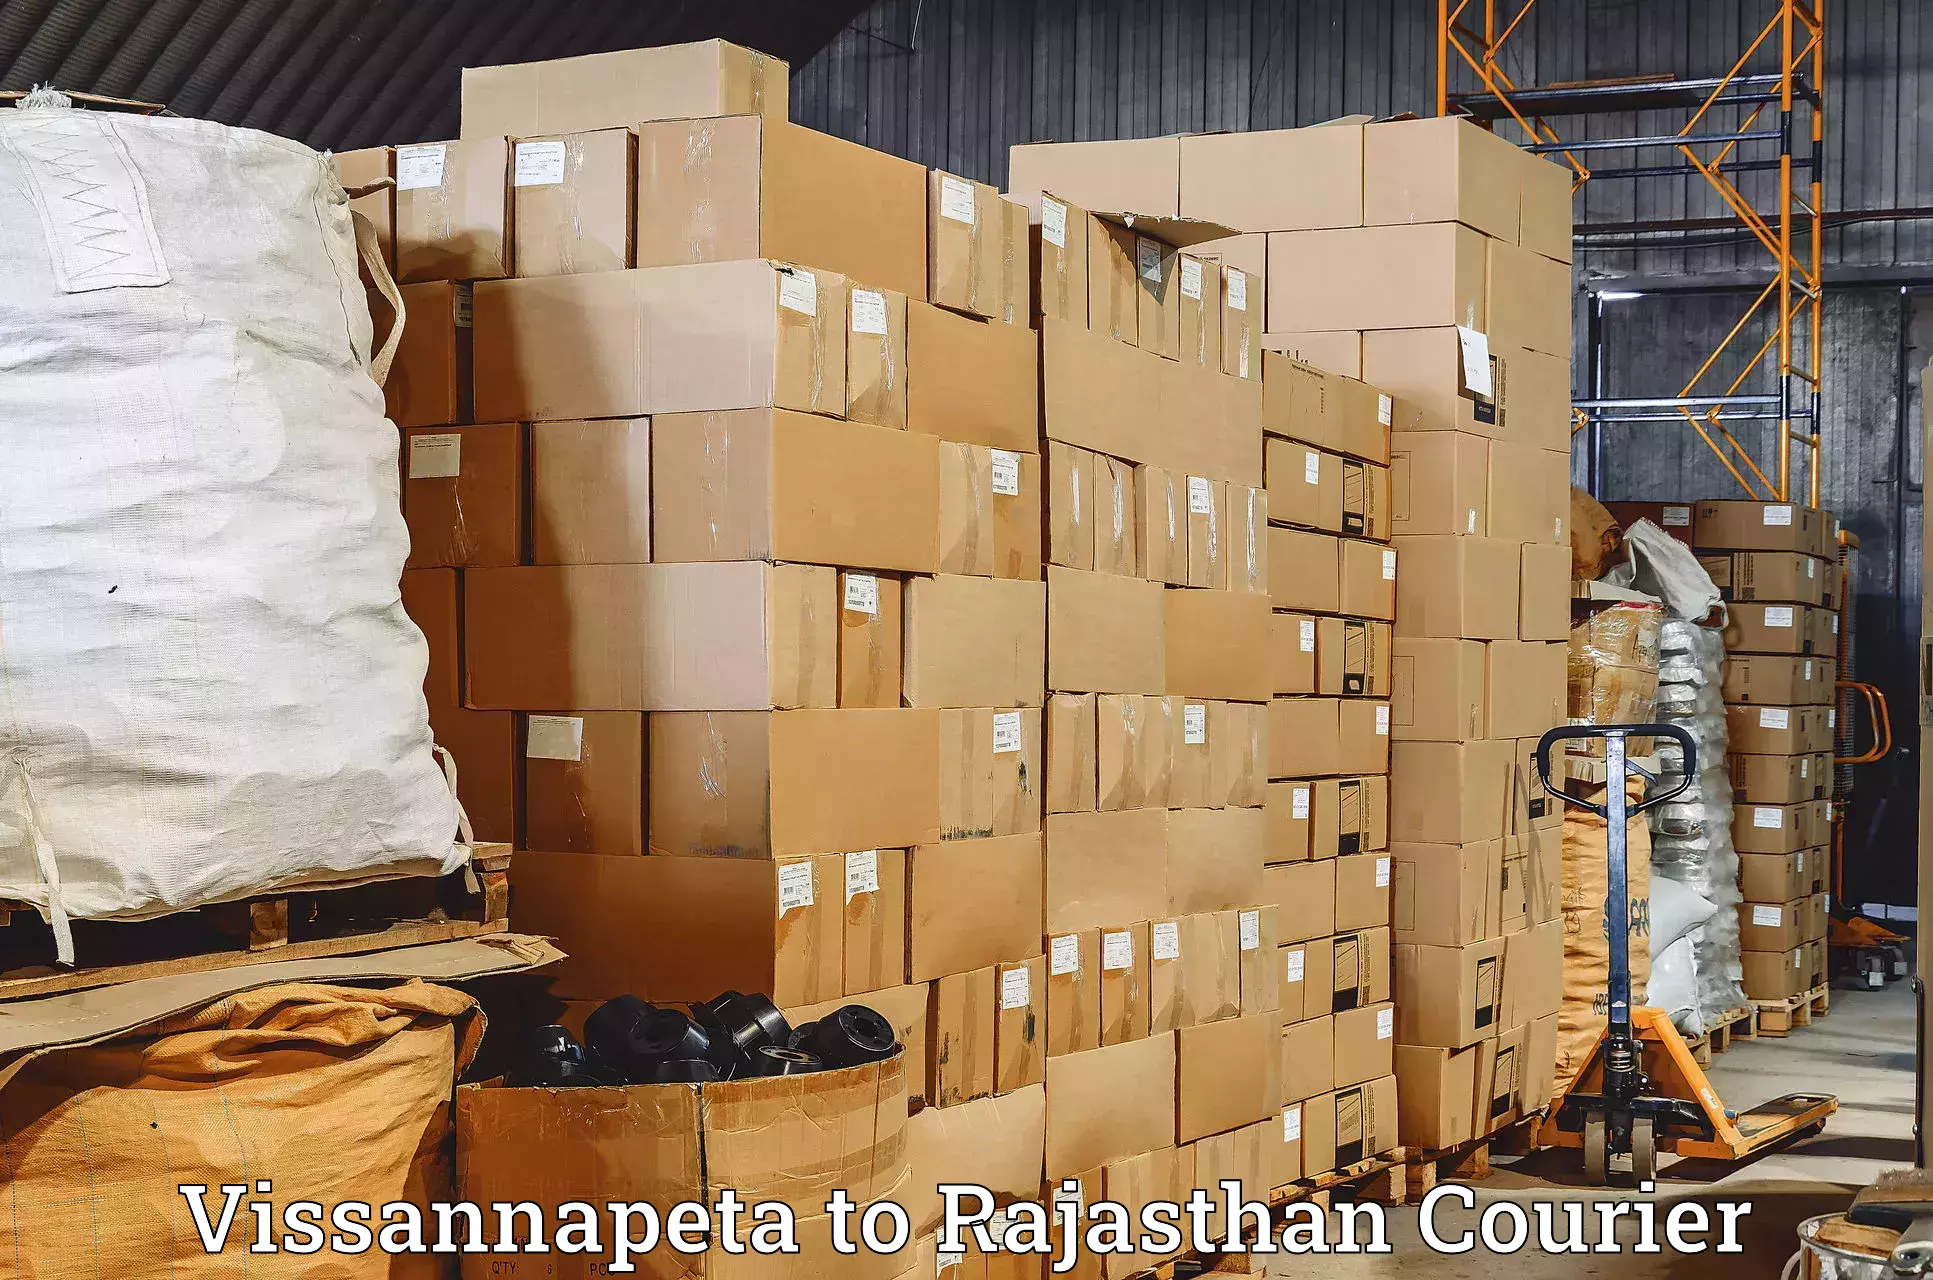 Express delivery capabilities Vissannapeta to Bhinder